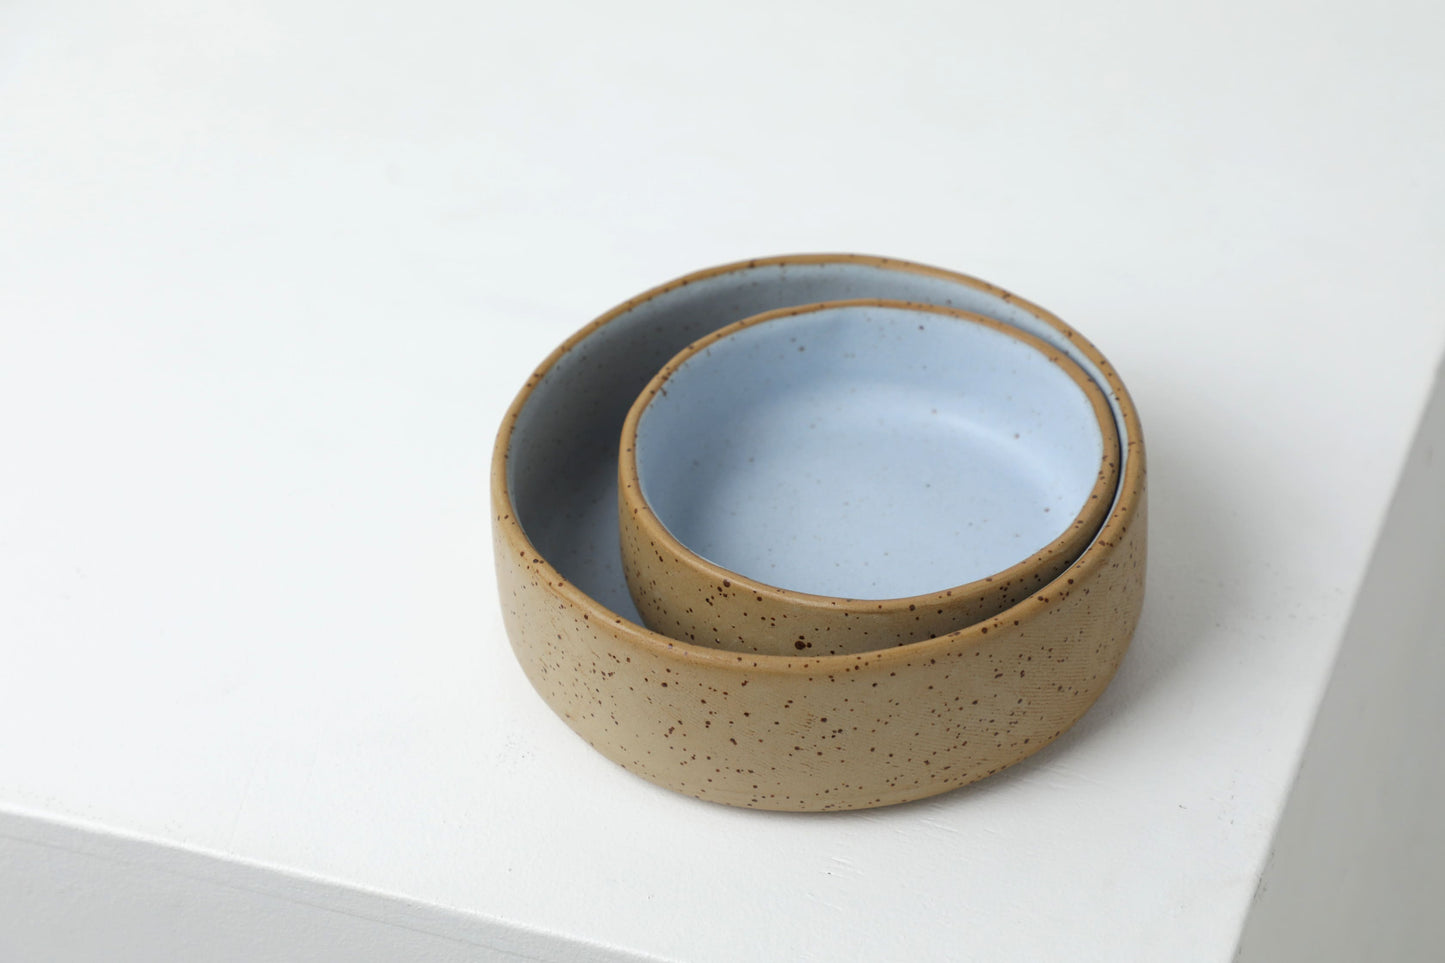 Handmade ceramic dog bowls | RAW+SKY BLUE - premium dog goods handmade in Europe by animalistus